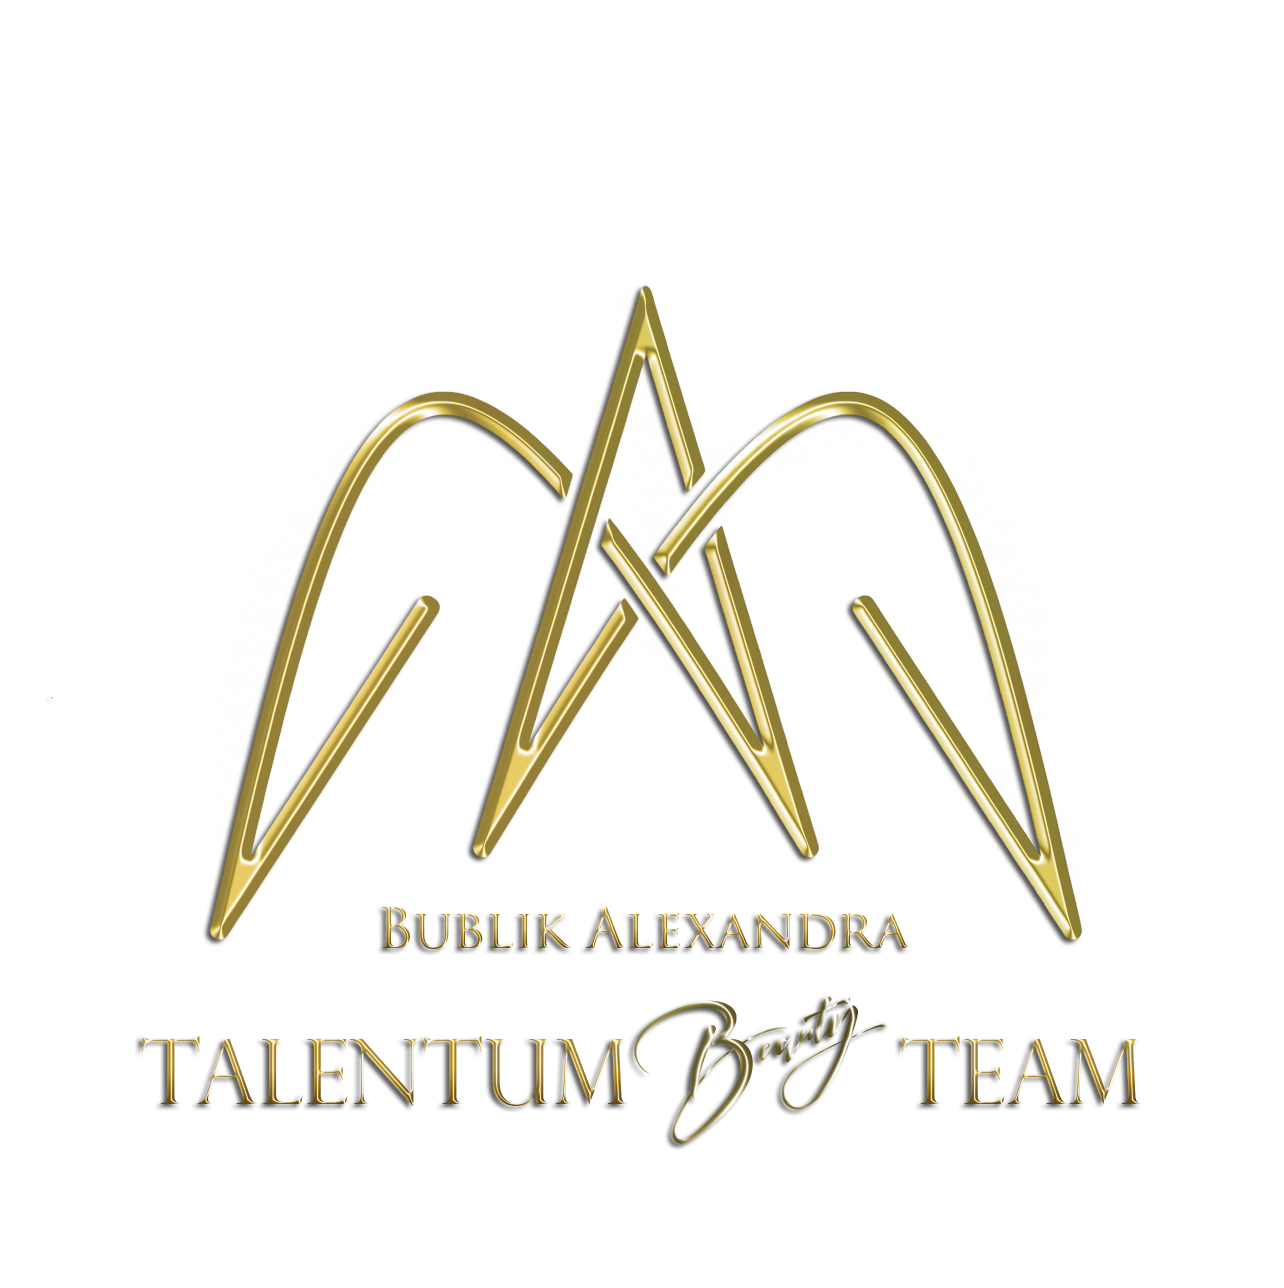 talentum beauty team logo alex